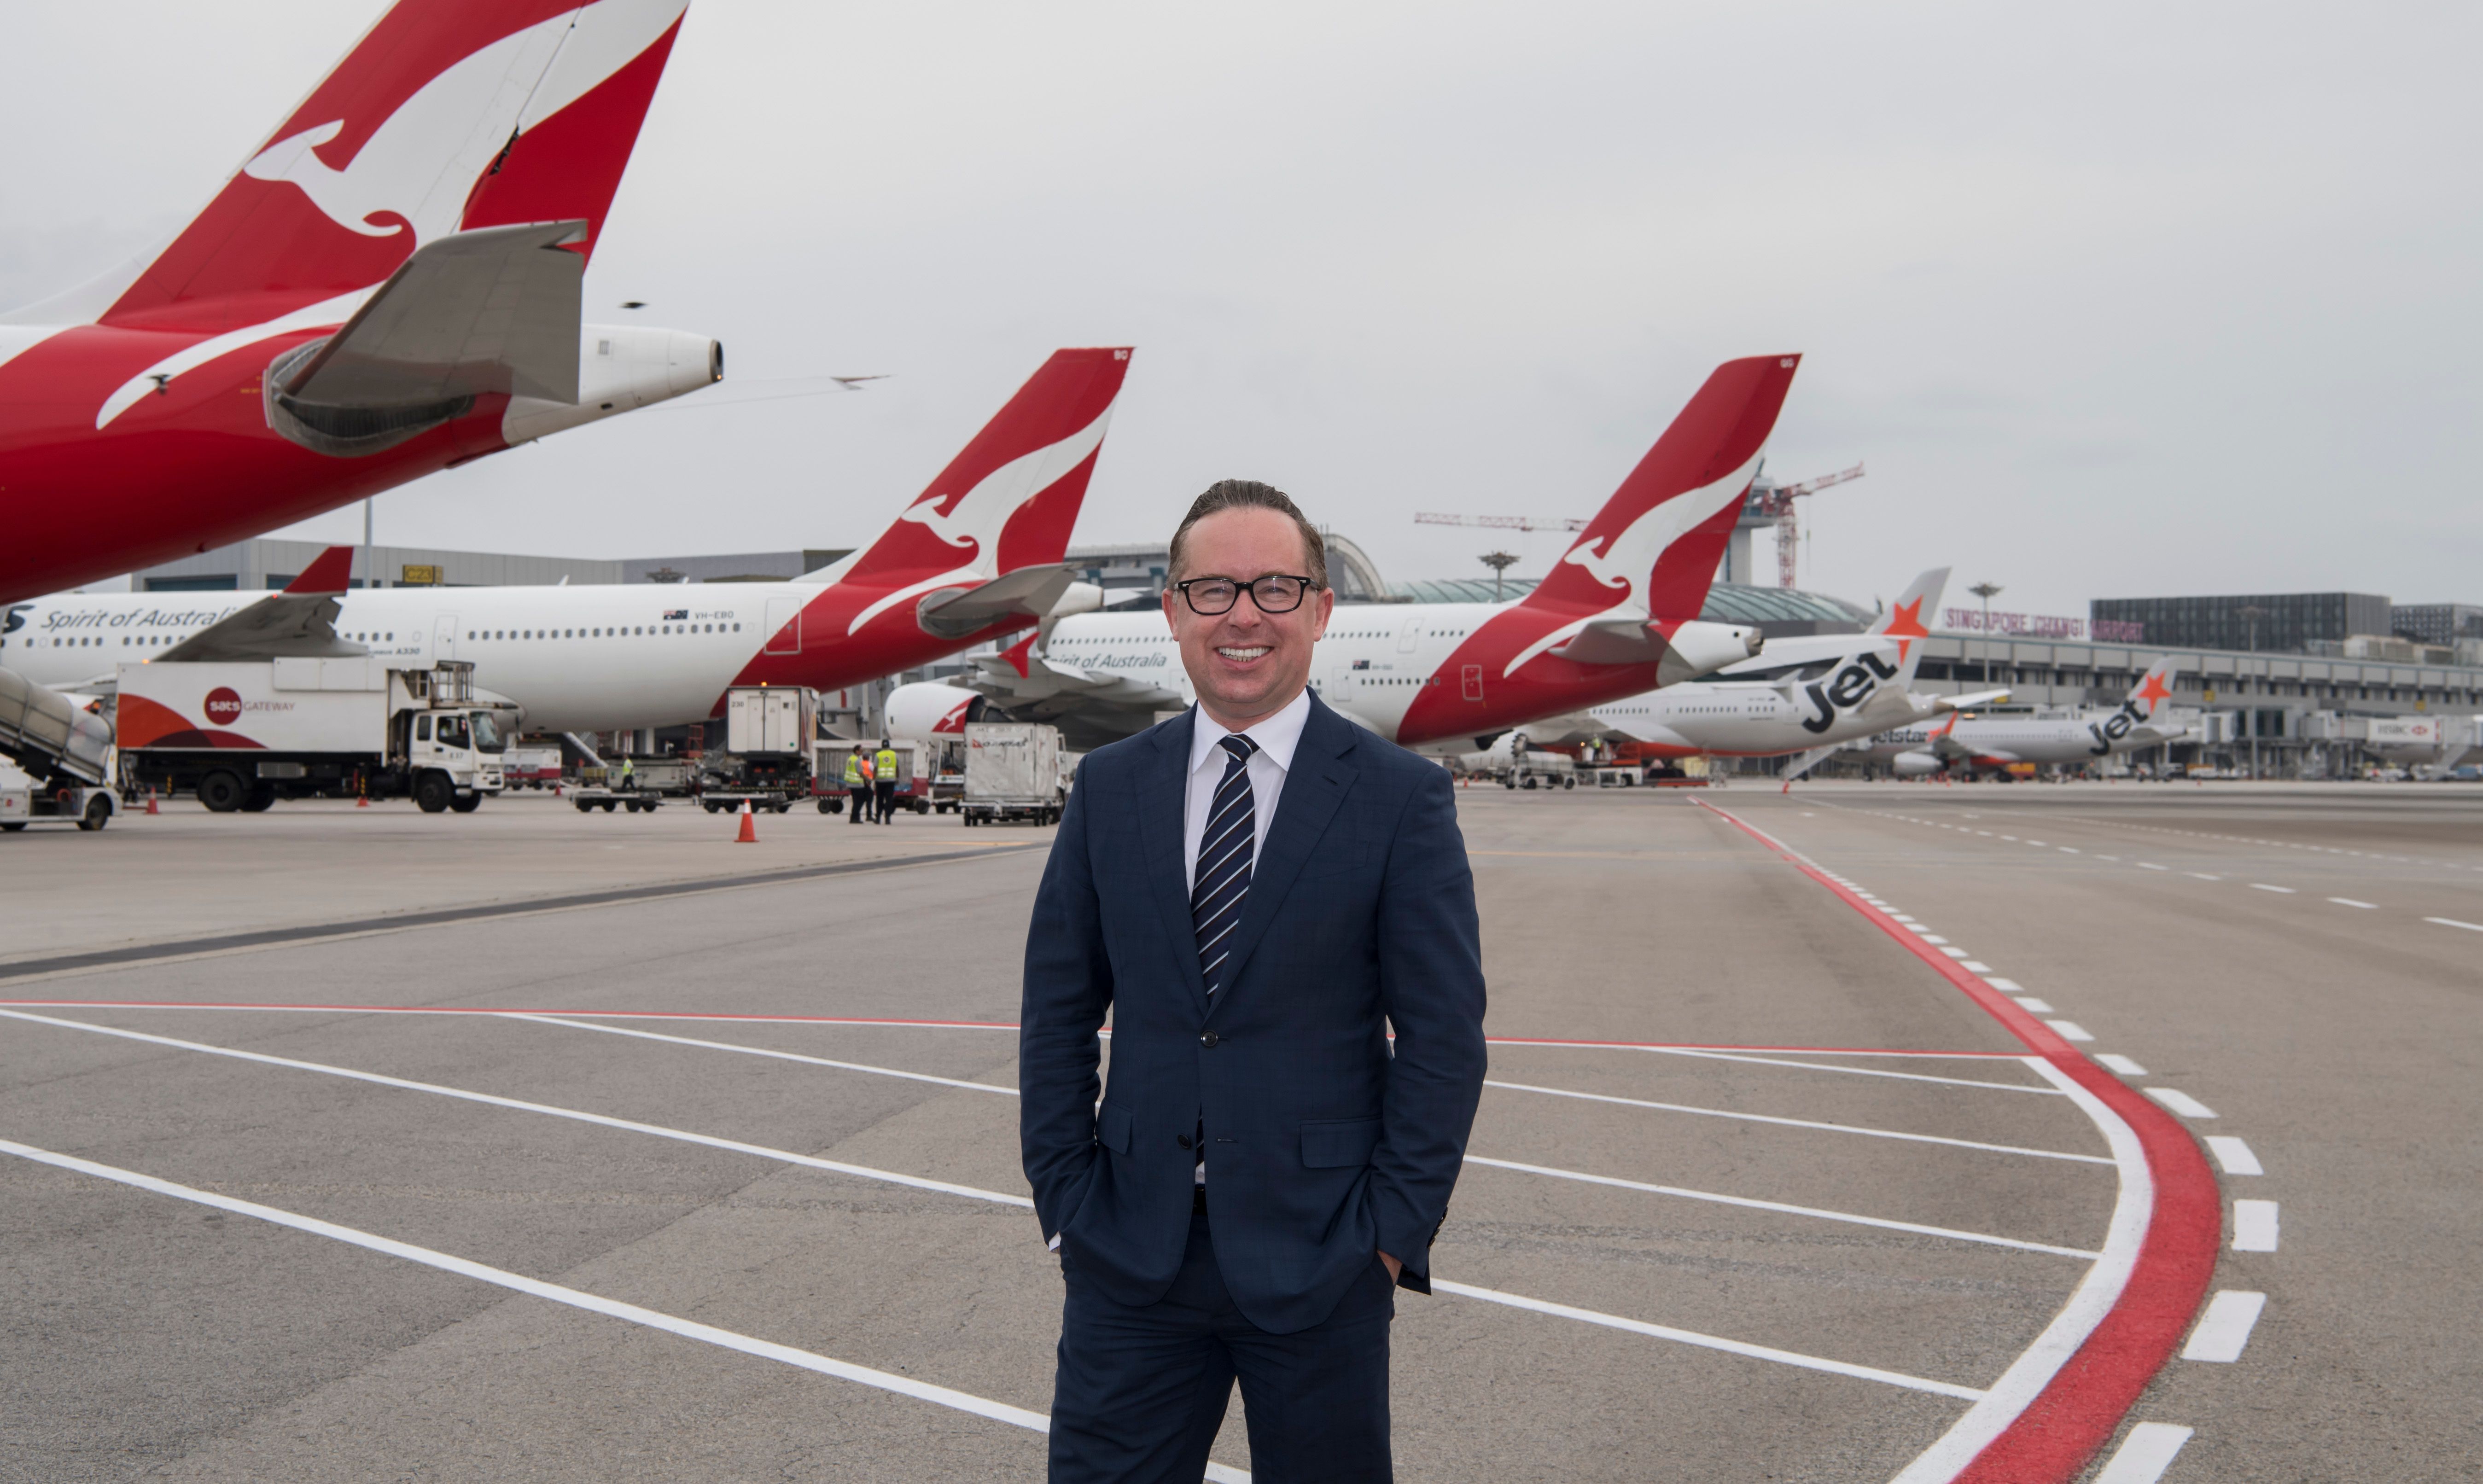 Qantas CEO Alan Joyce standing in front of planes